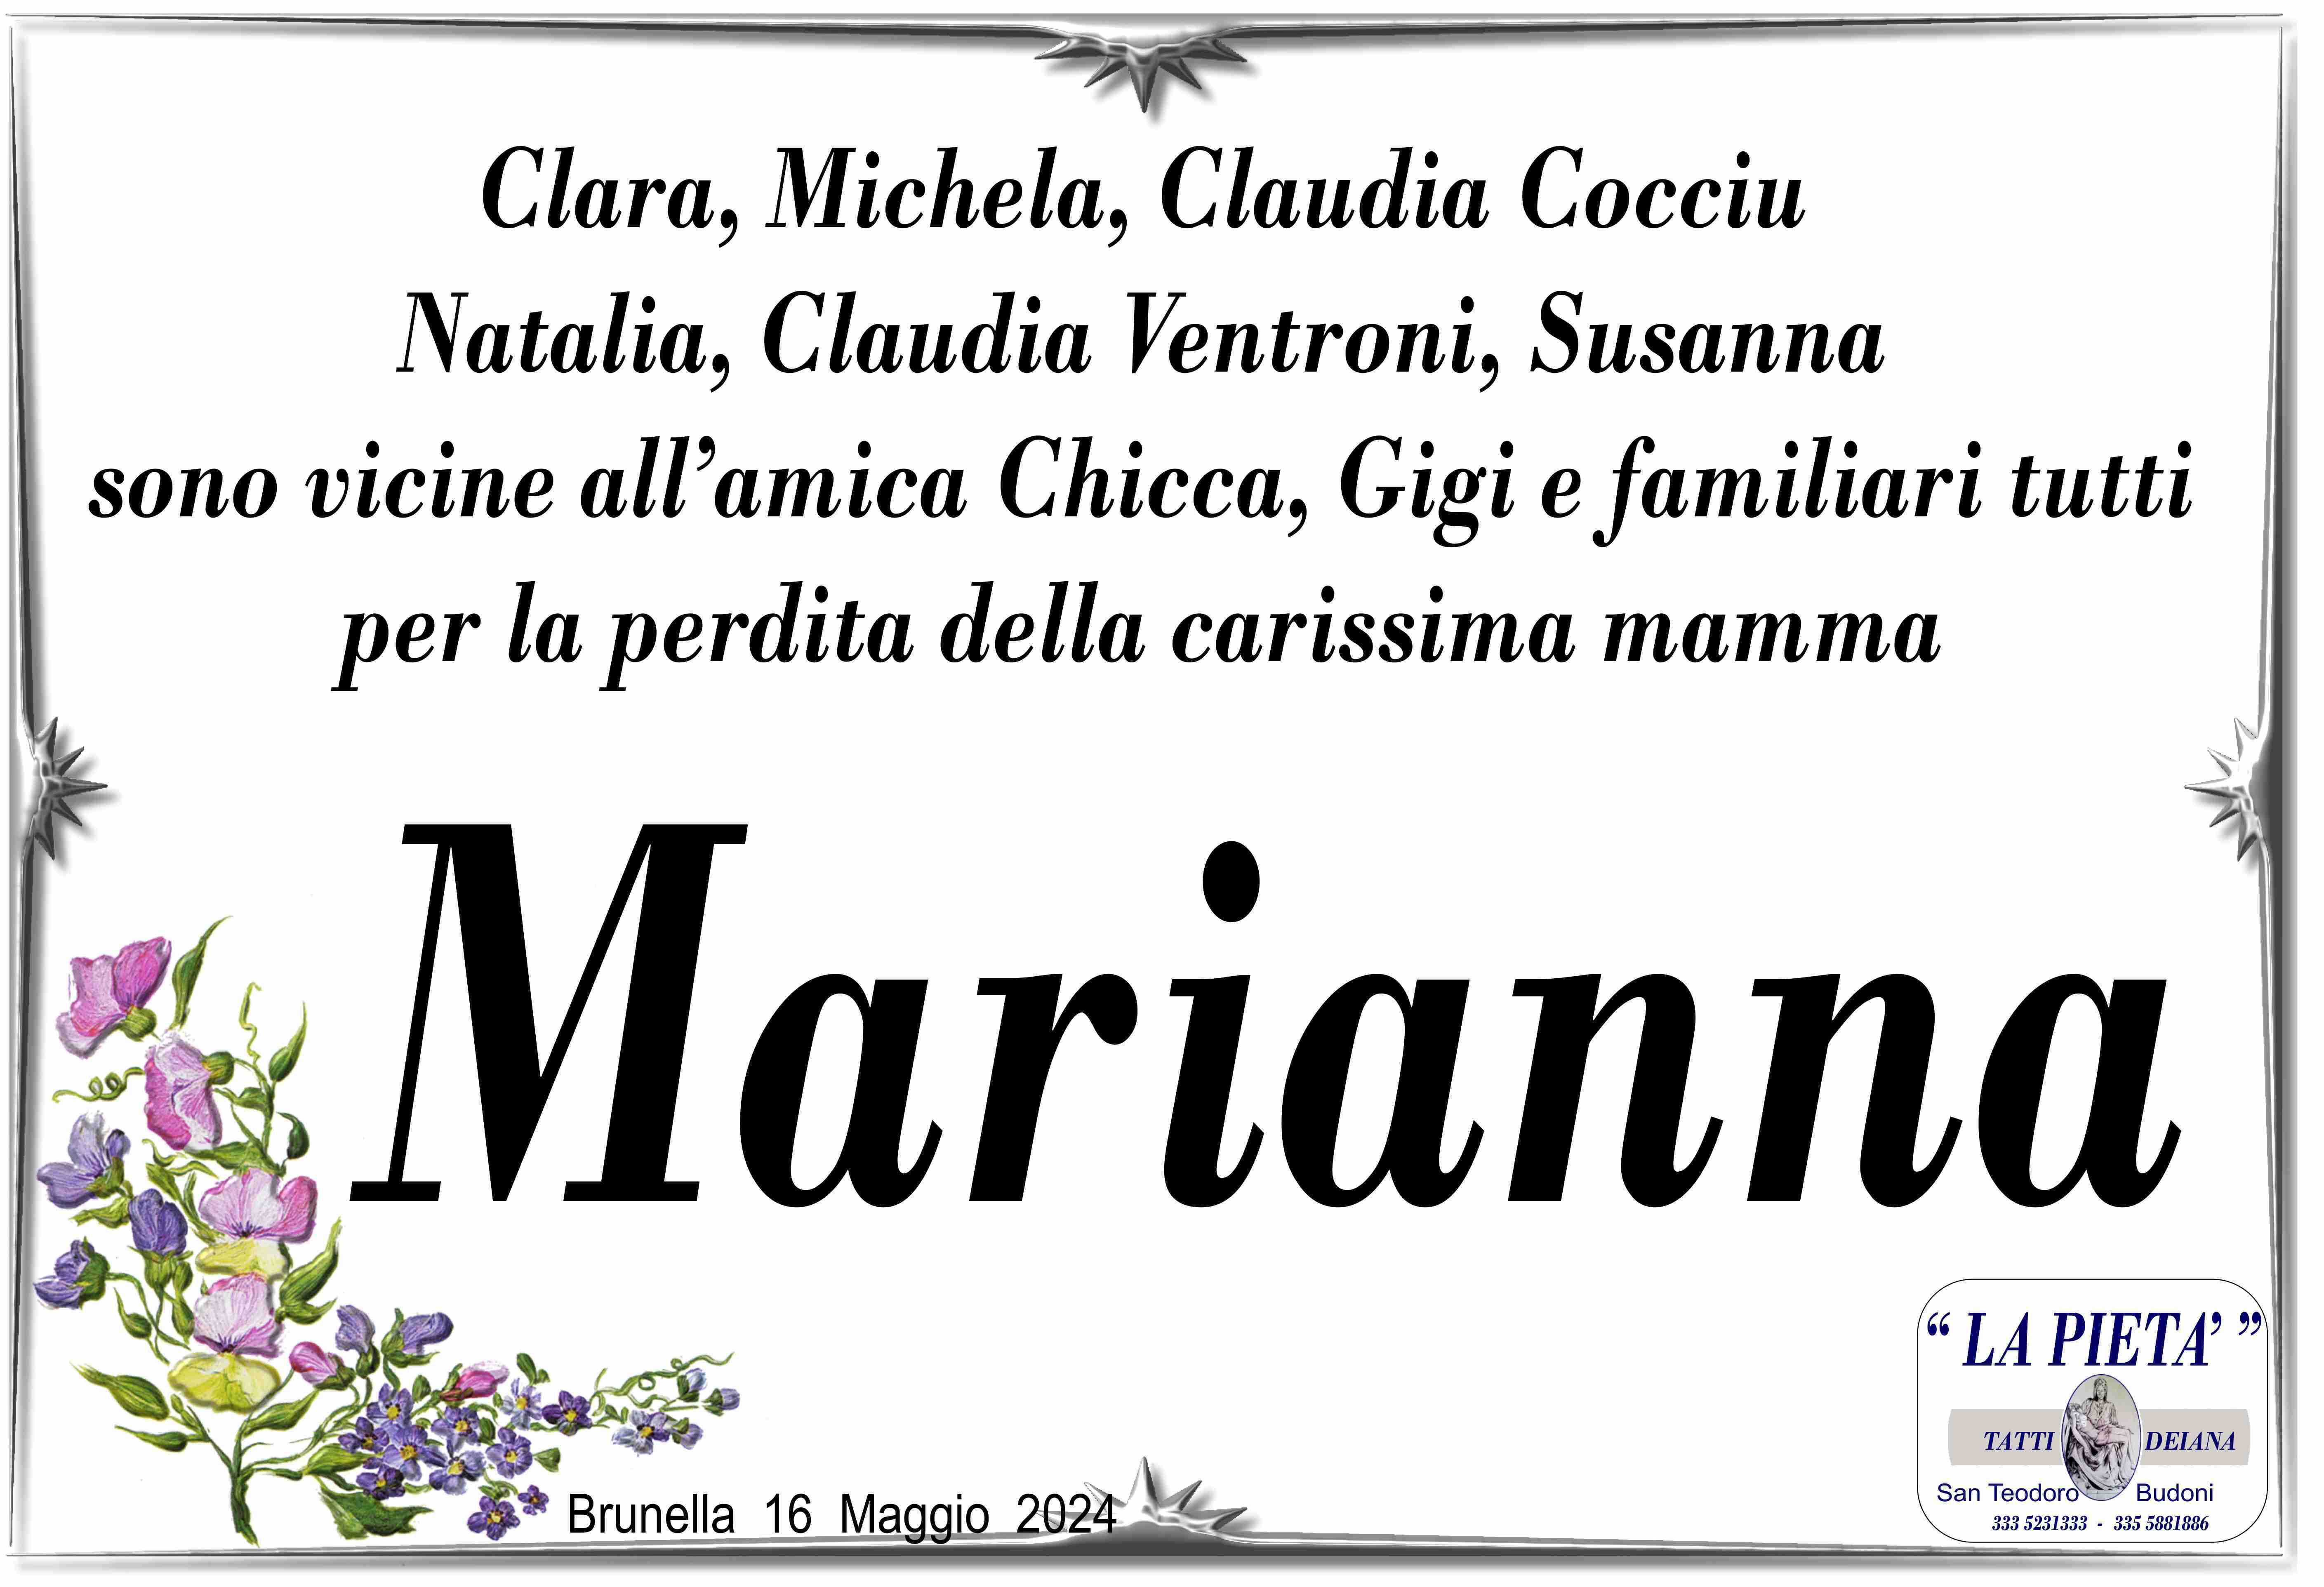 Marianna Decandia